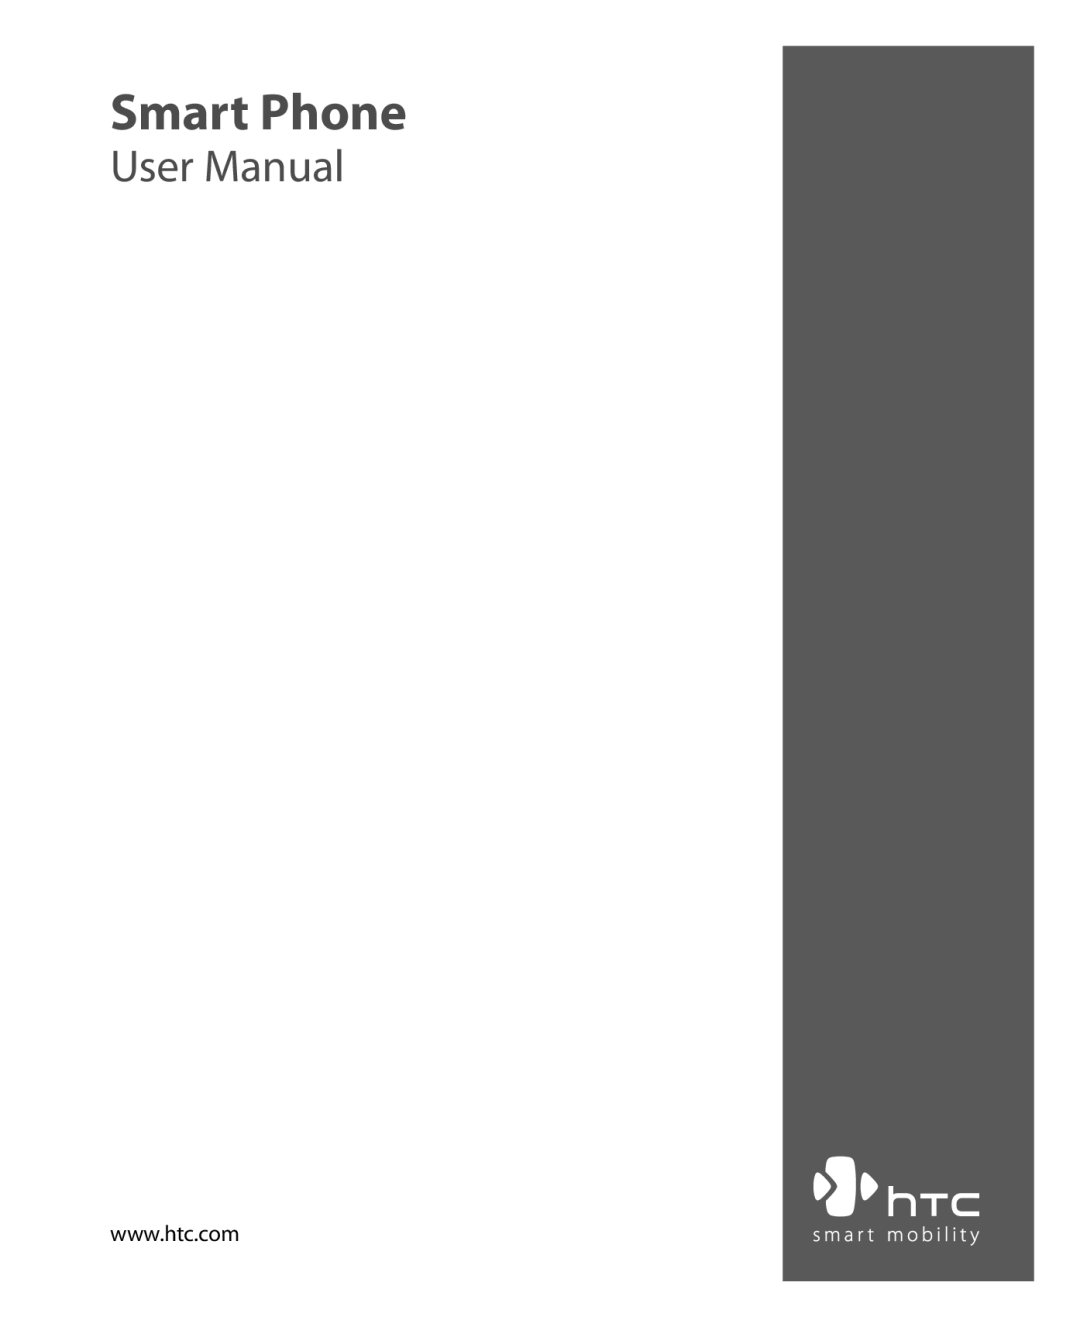 HTC HTC S621 user manual Smart Phone, User Manual 